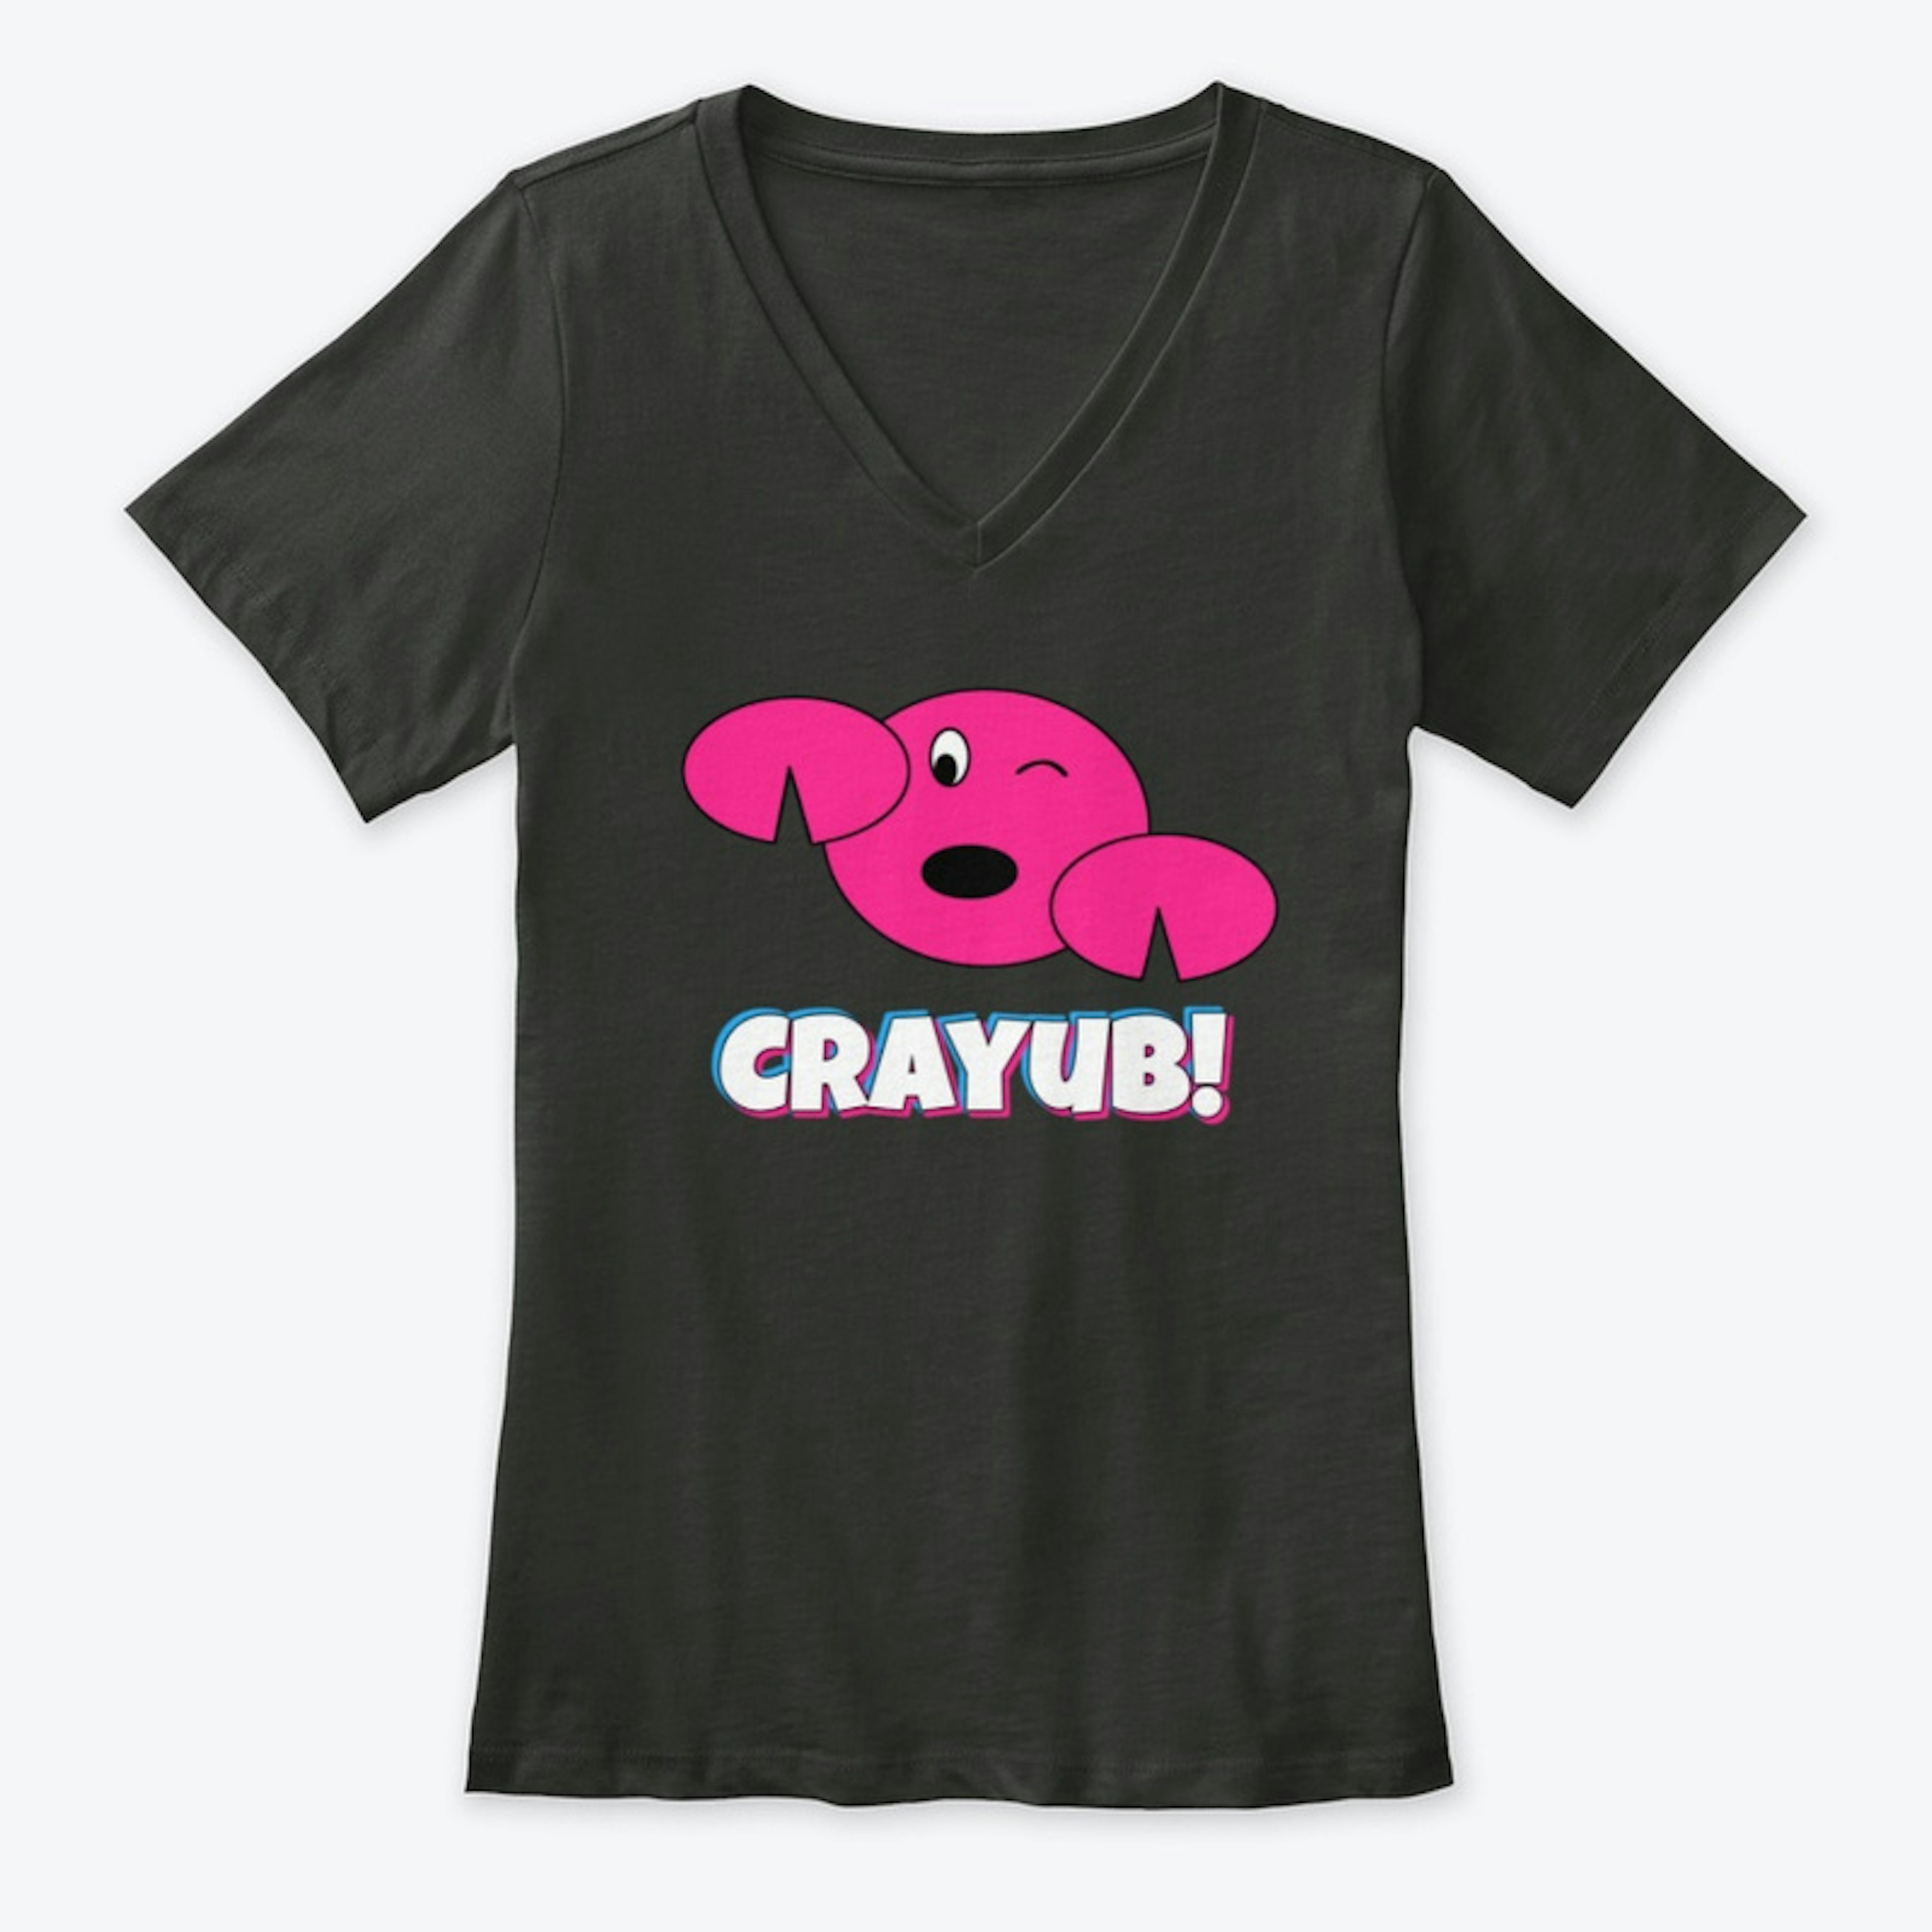 Hot Pink Crayub! :)